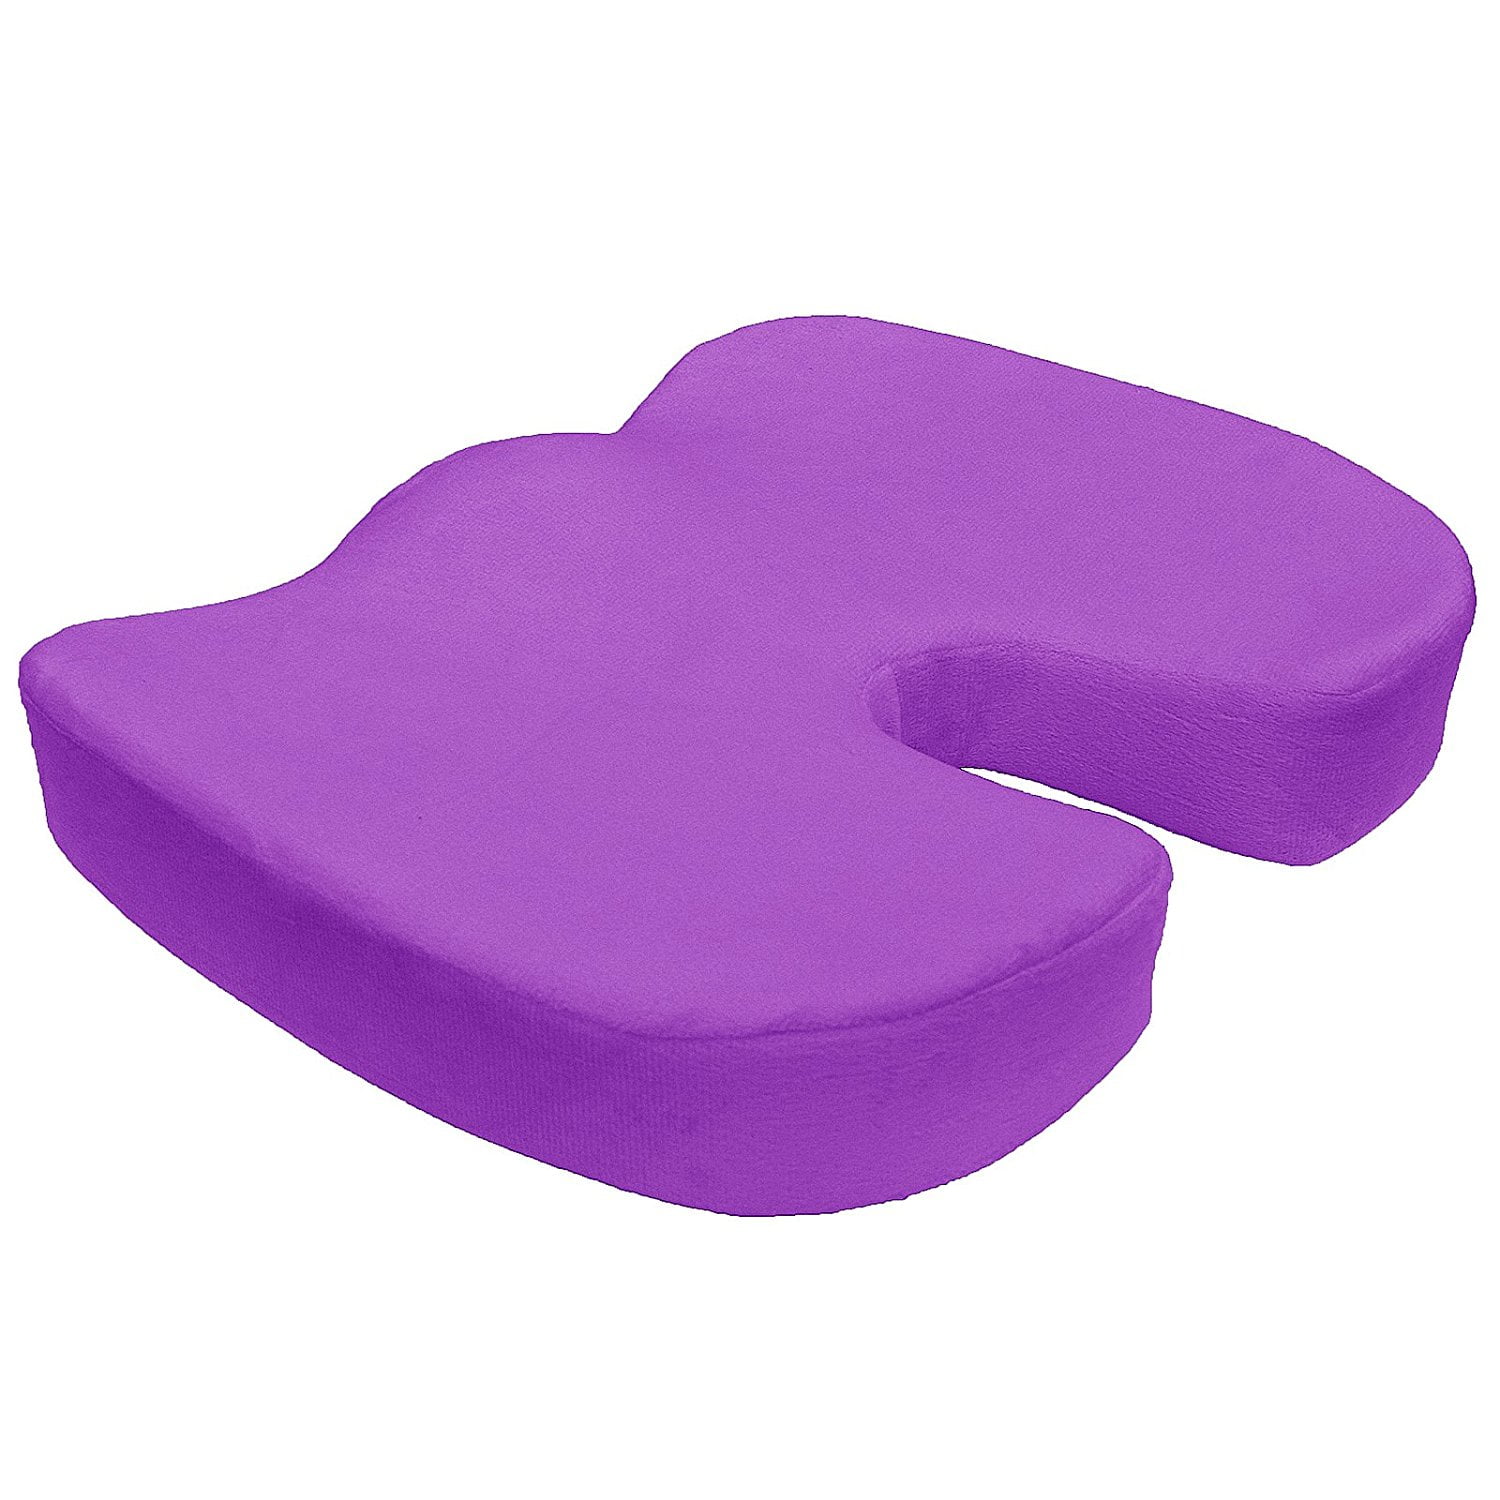 Qutool Memory Foam Coccyx Seat Cushion & Lumbar Support Pillow for Office  Chair Car Wheelchair Orthopedic Chair Pad&Back Cushion